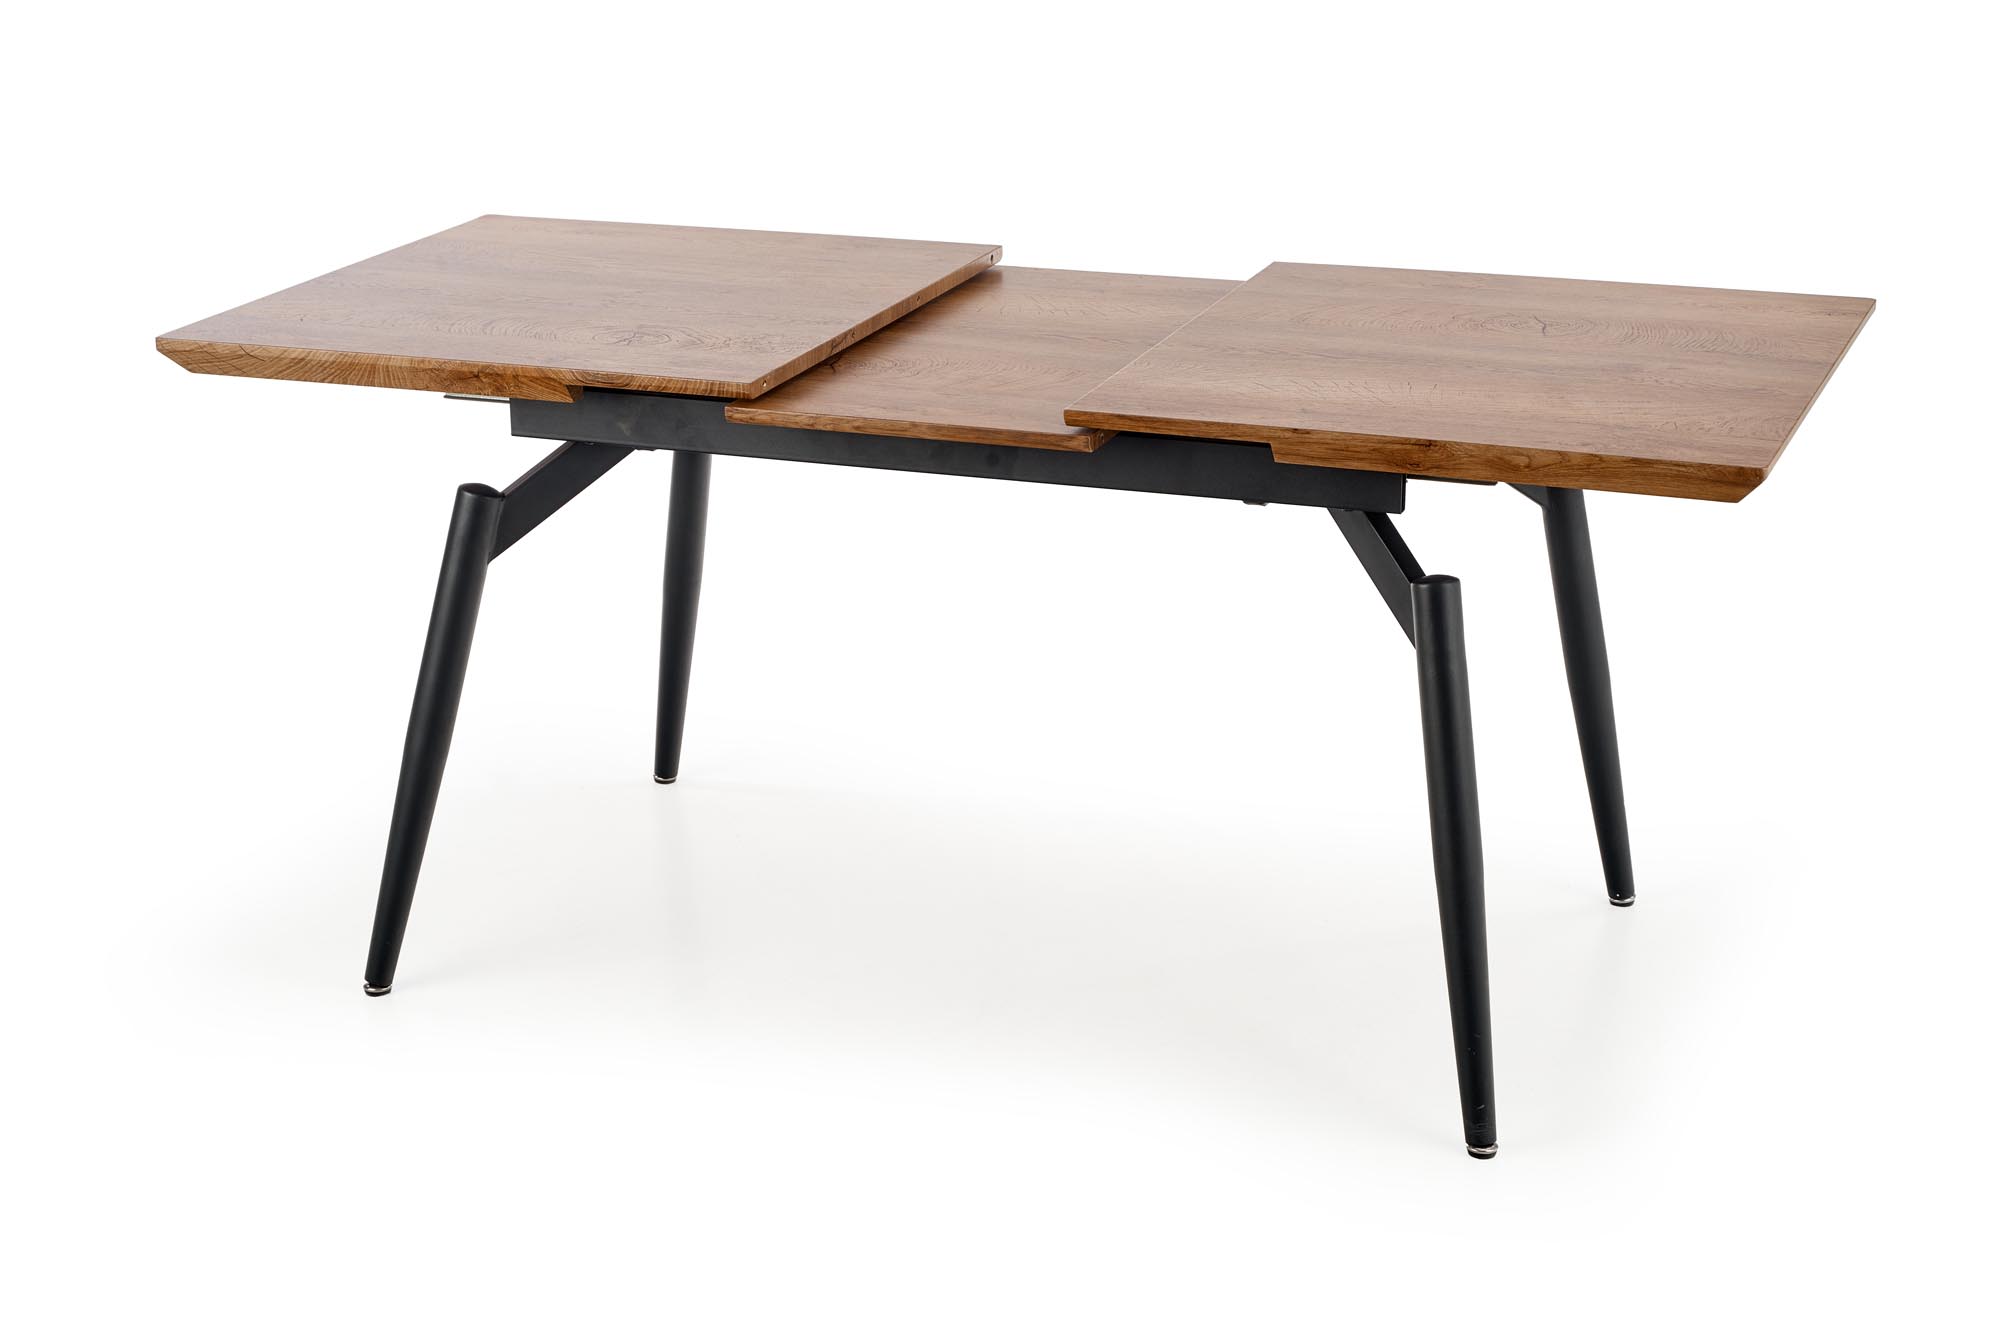 Stół rozkładany Cambell naturalny/czarny stół rozkładany cambell naturalny/czarny